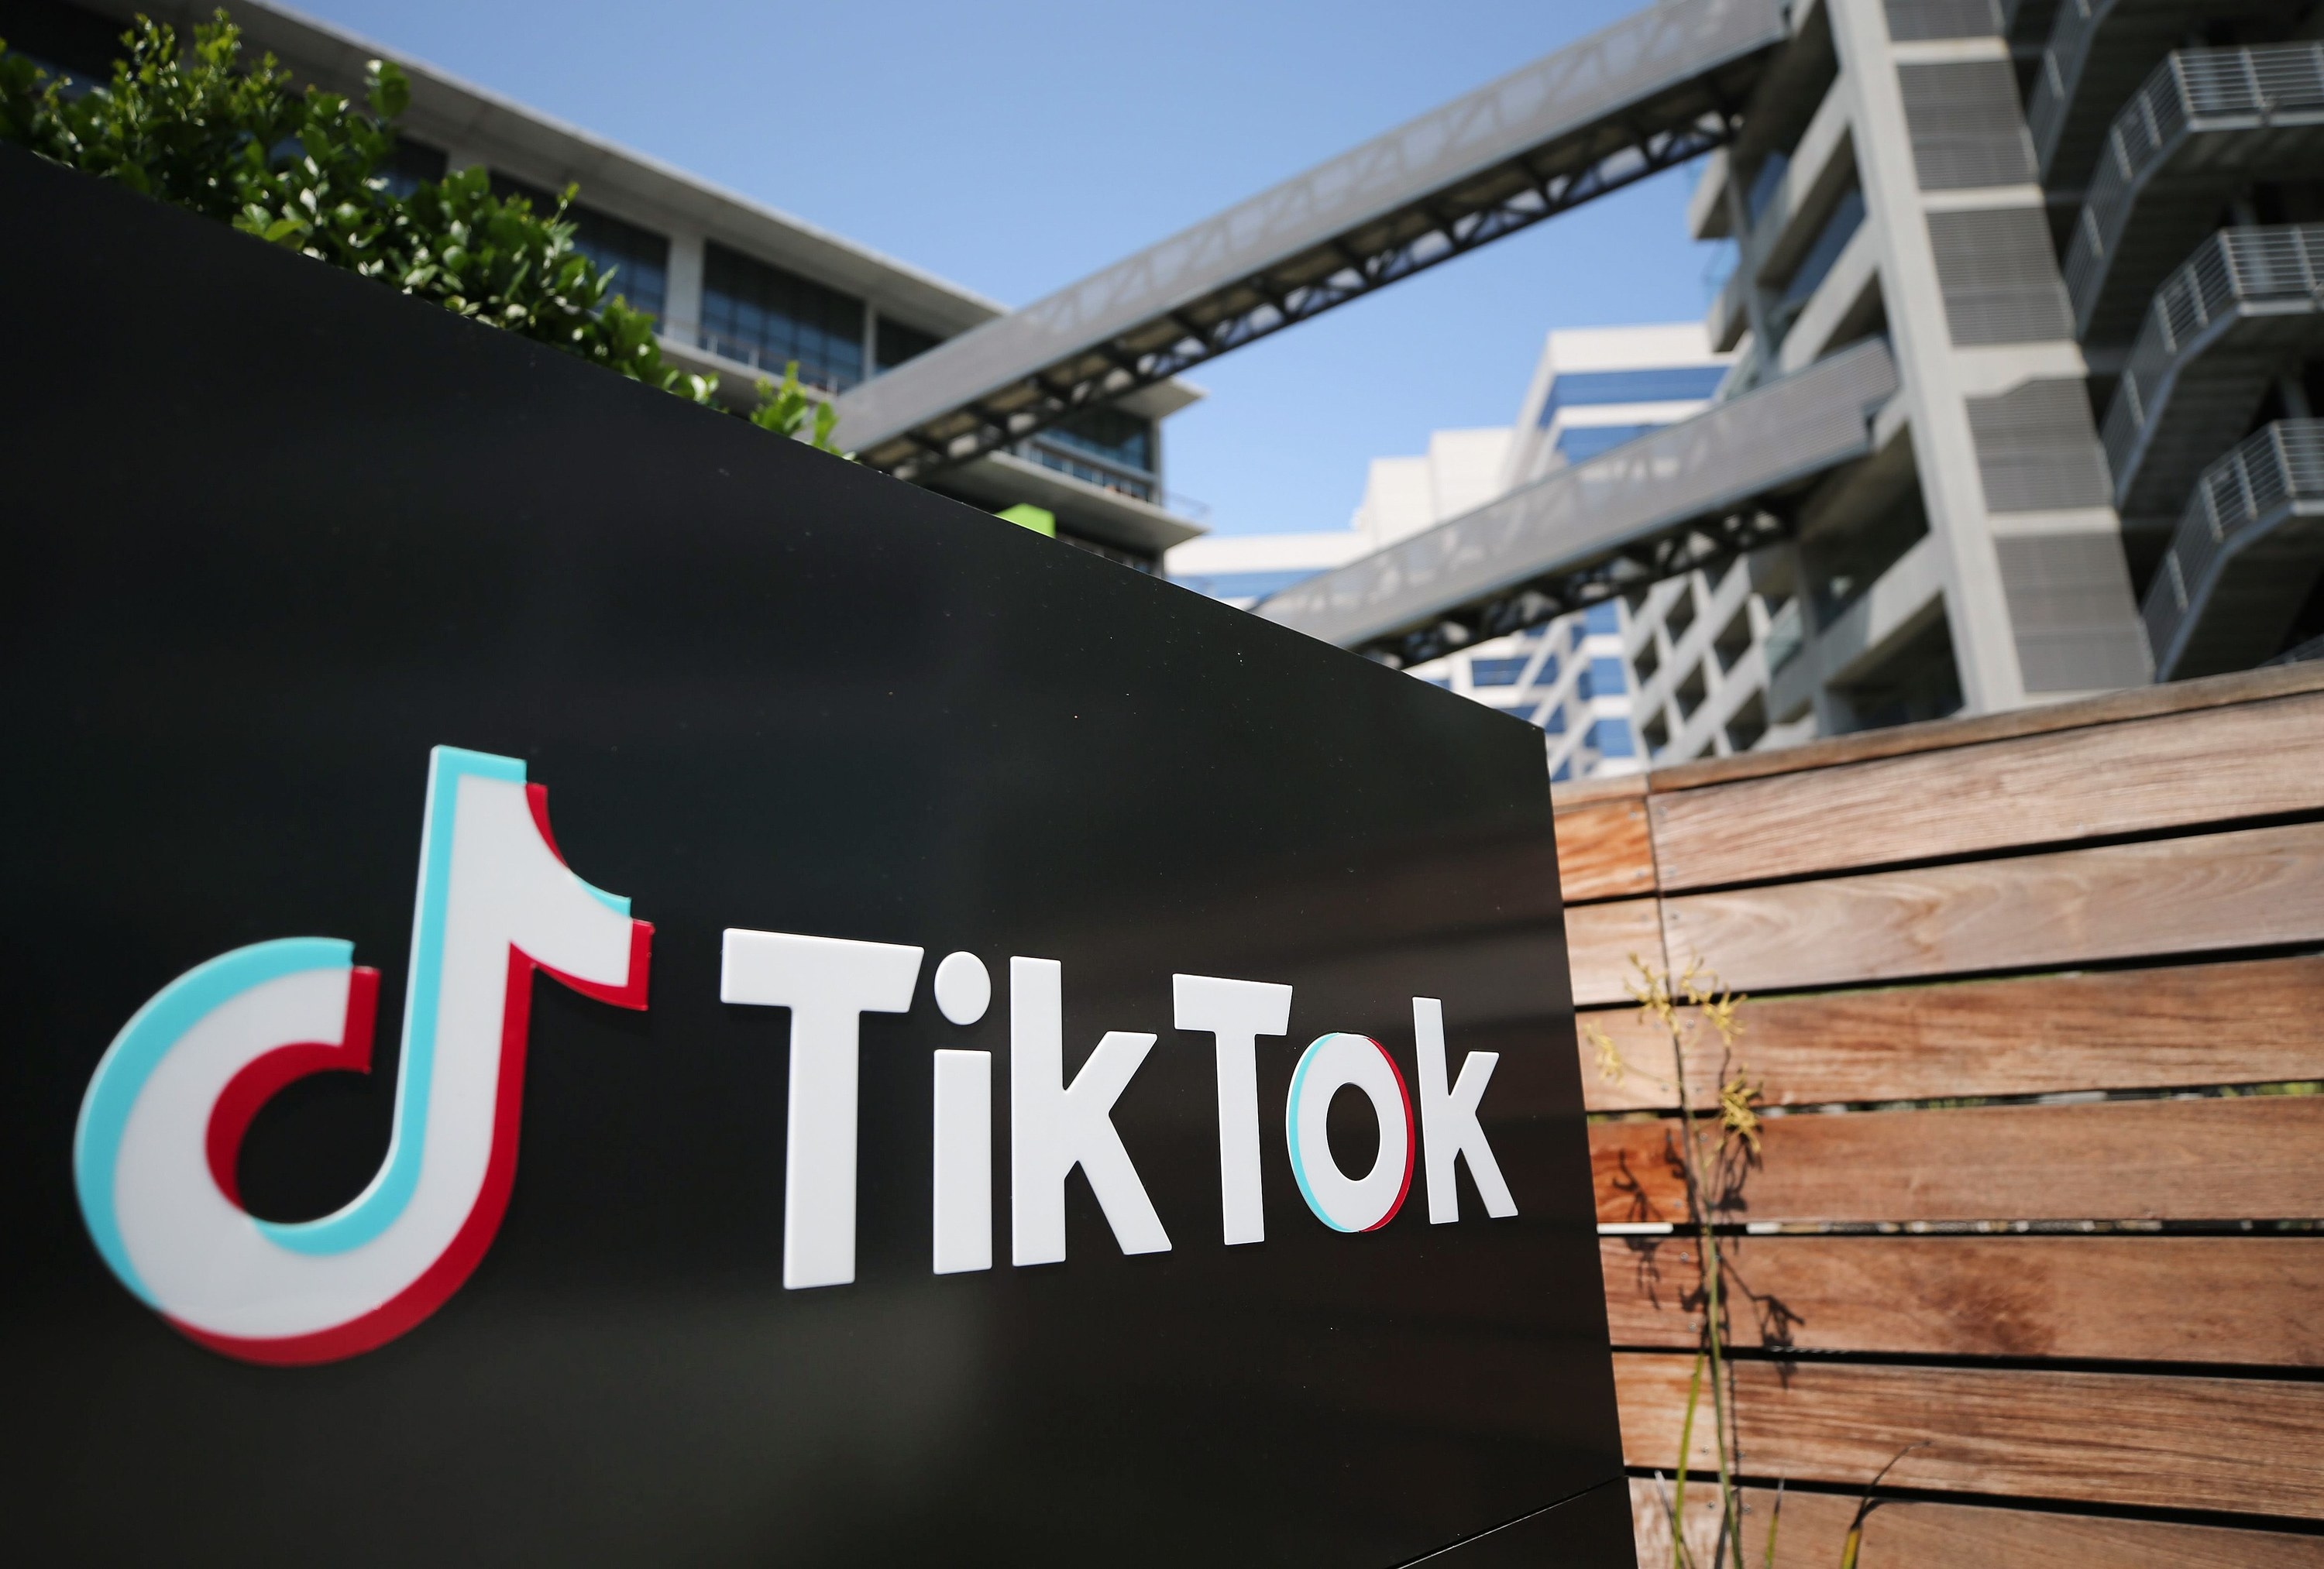 The TikTok logo outside of a building